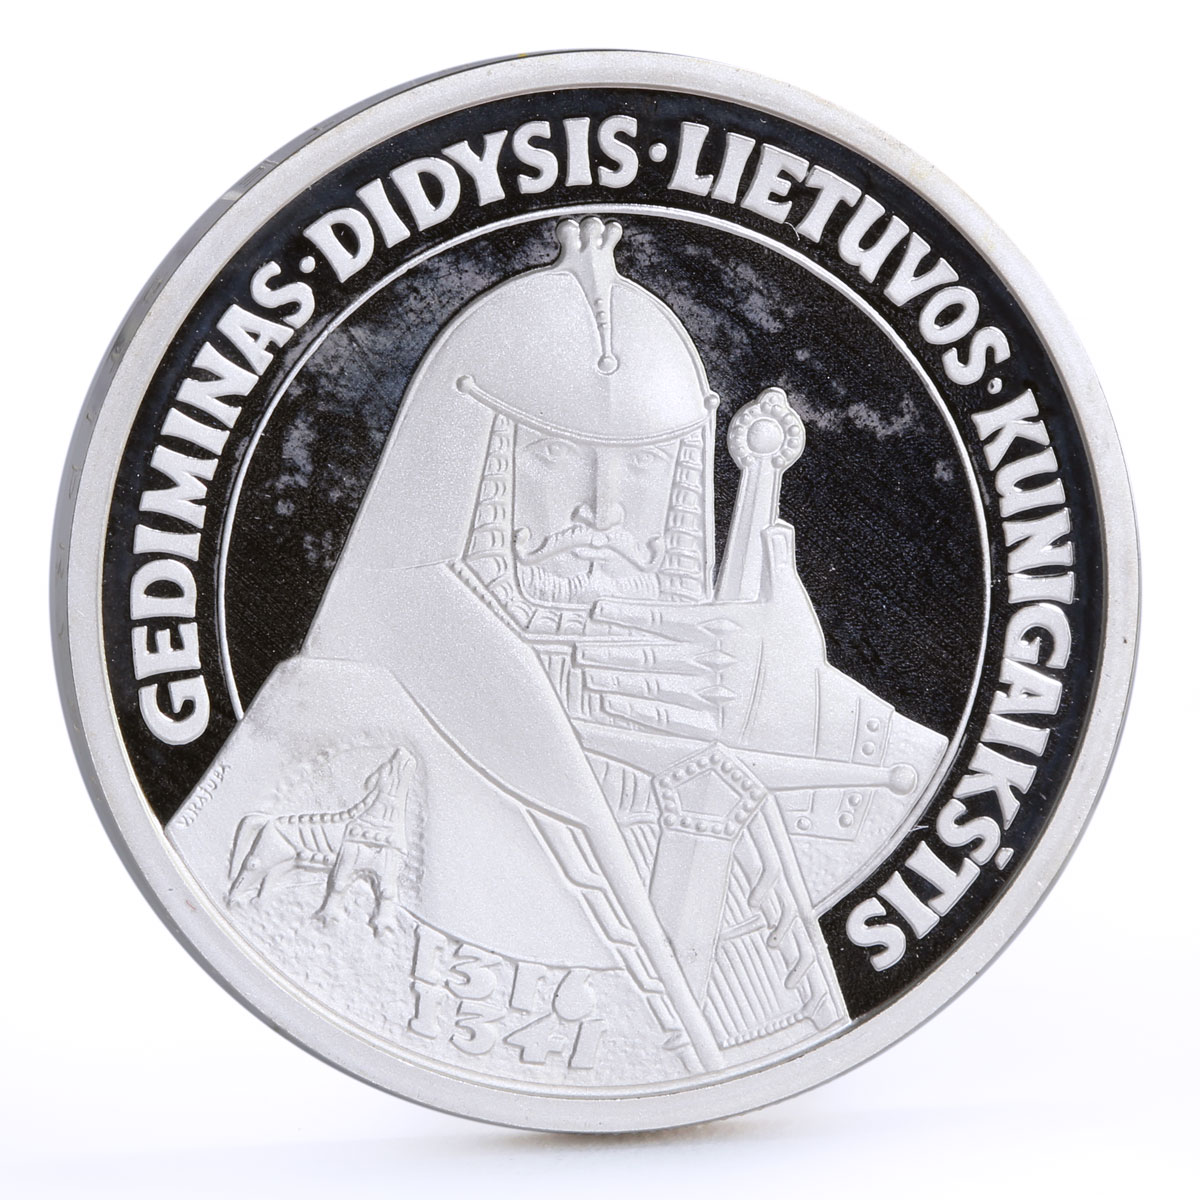 Lithuania 50 litu The Grand Duke Gediminas proof silver coin 1996